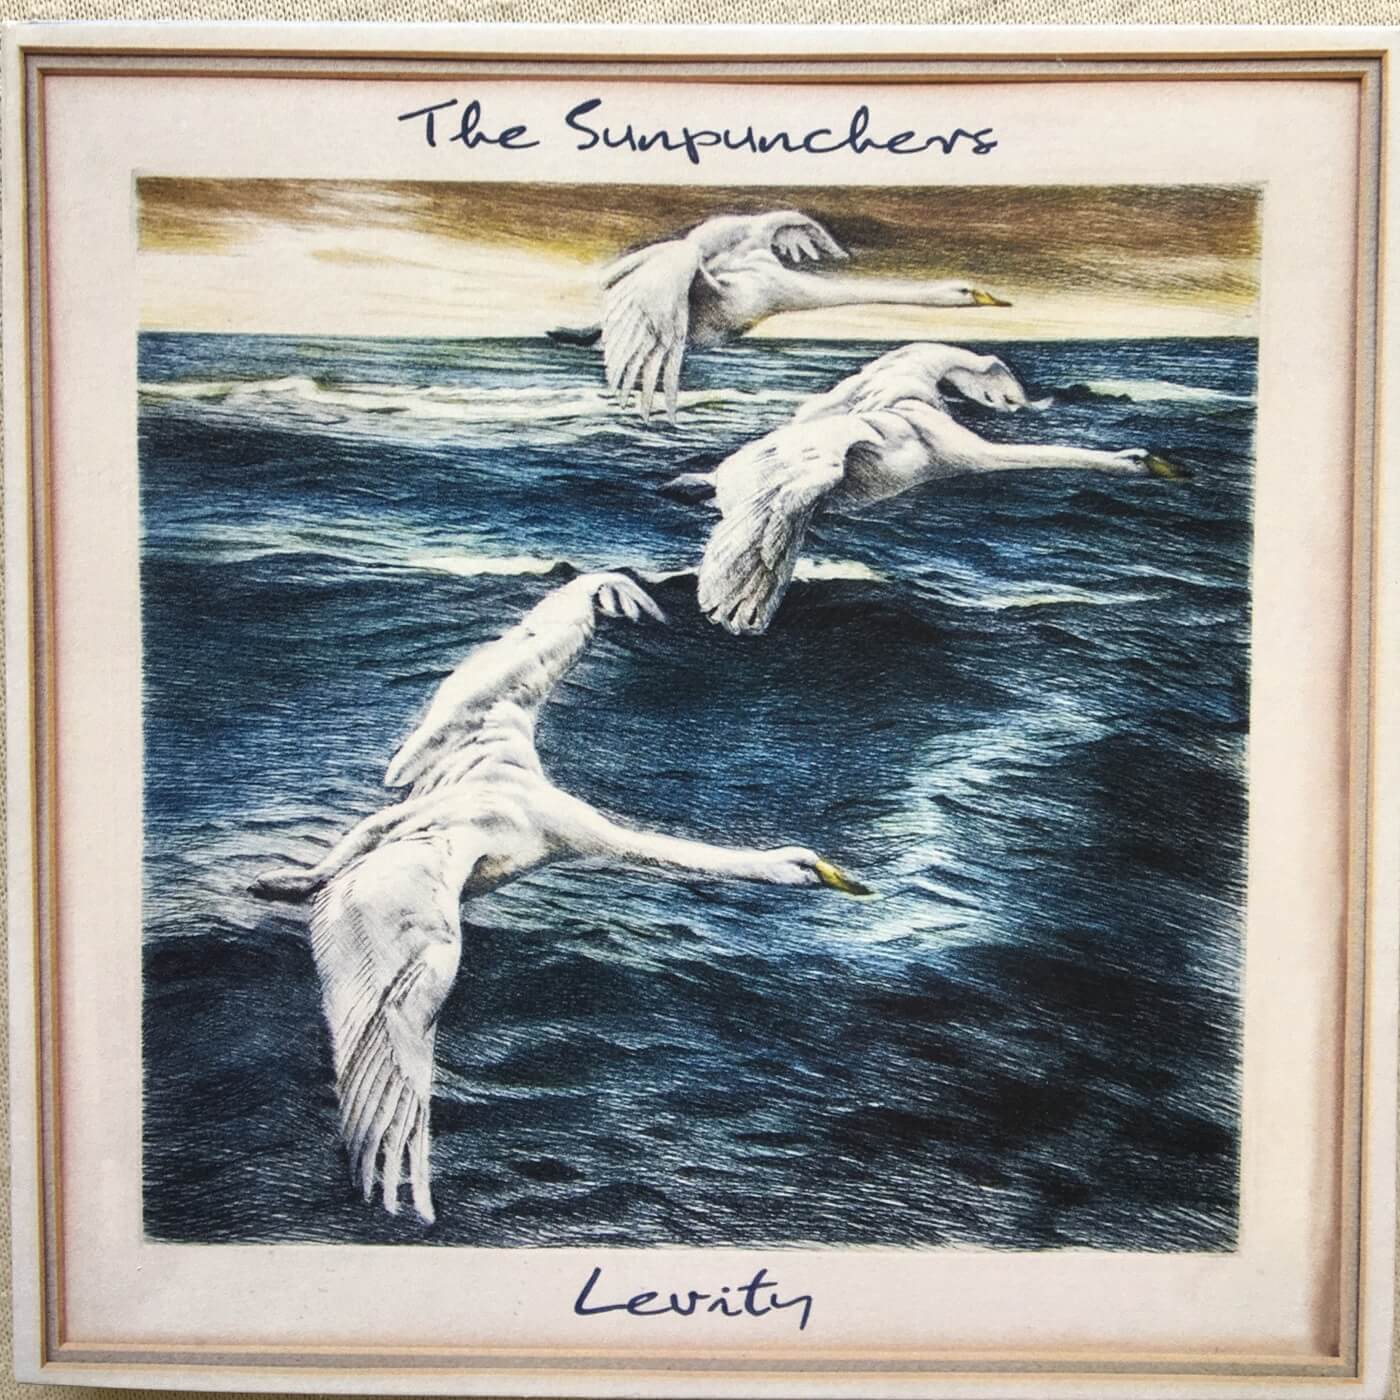 The SunPunchers - Levity